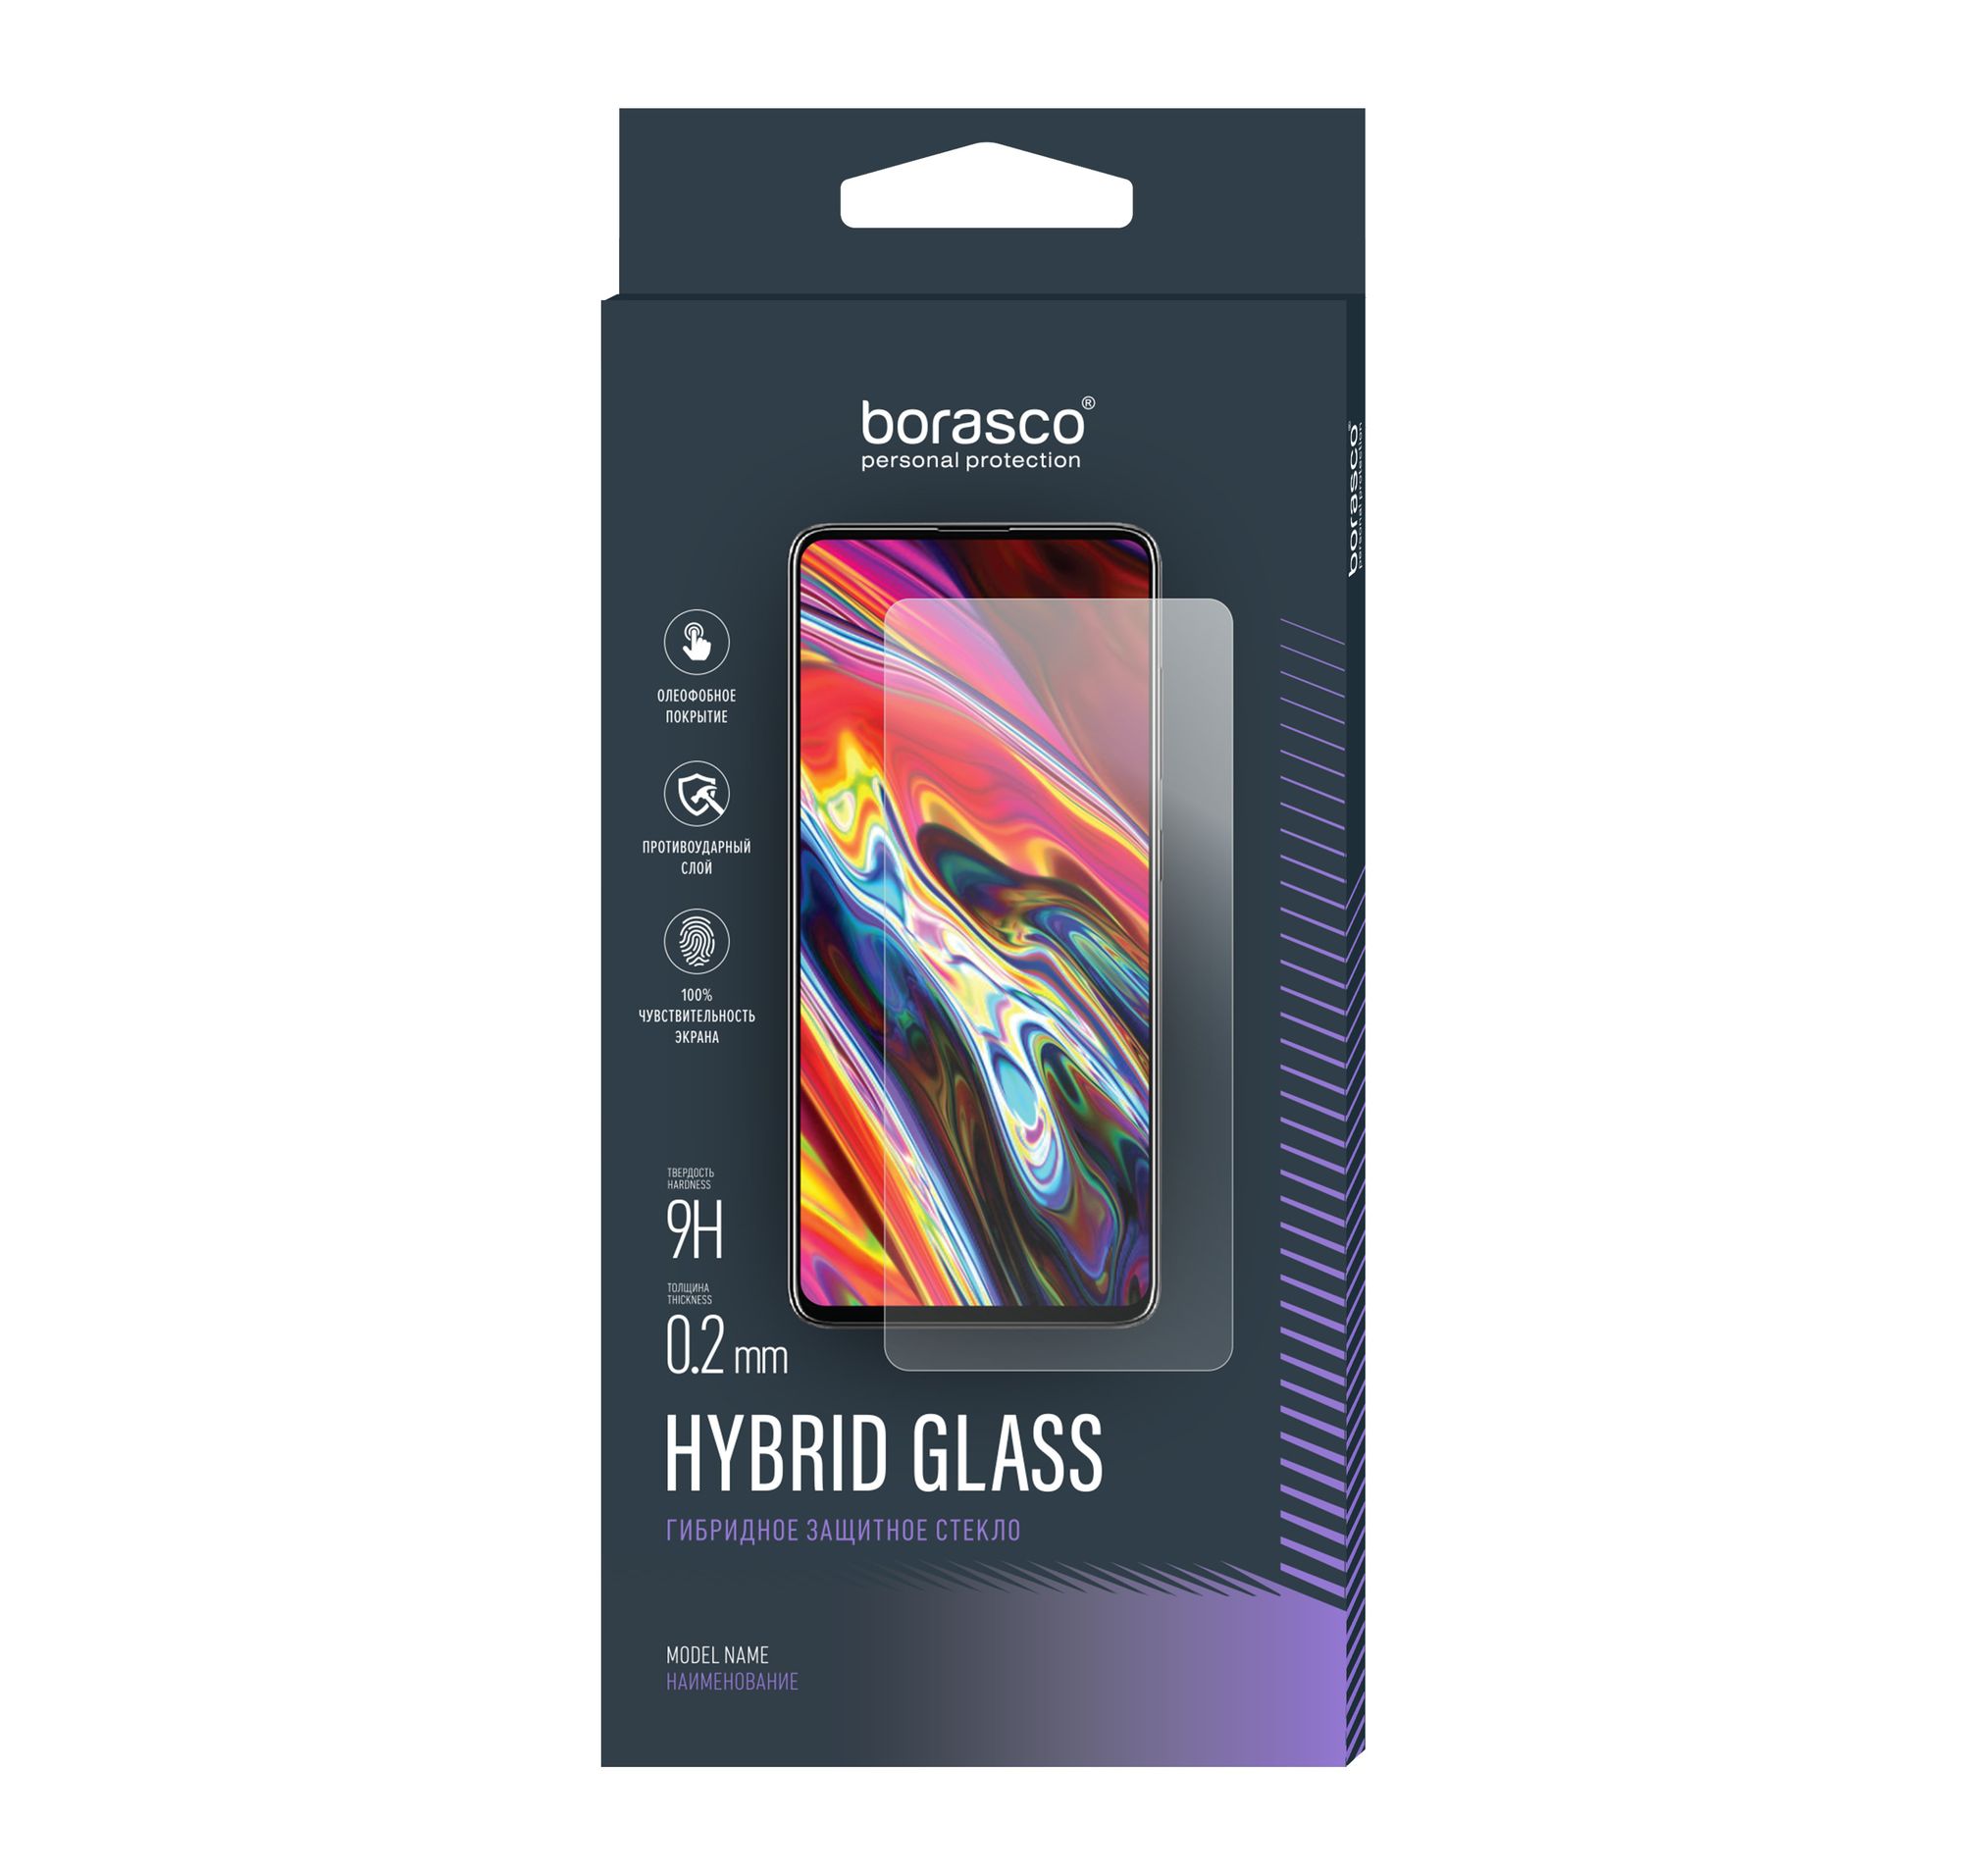 Стекло защитное Hybrid Glass VSP 0,26 мм для Xiaomi Mi 9 T (K20)/ Mi 9 T Pro (K20 Pro) защитное стекло на xiaomi redmi k20 k20 pro mi 9t mi 9t pro